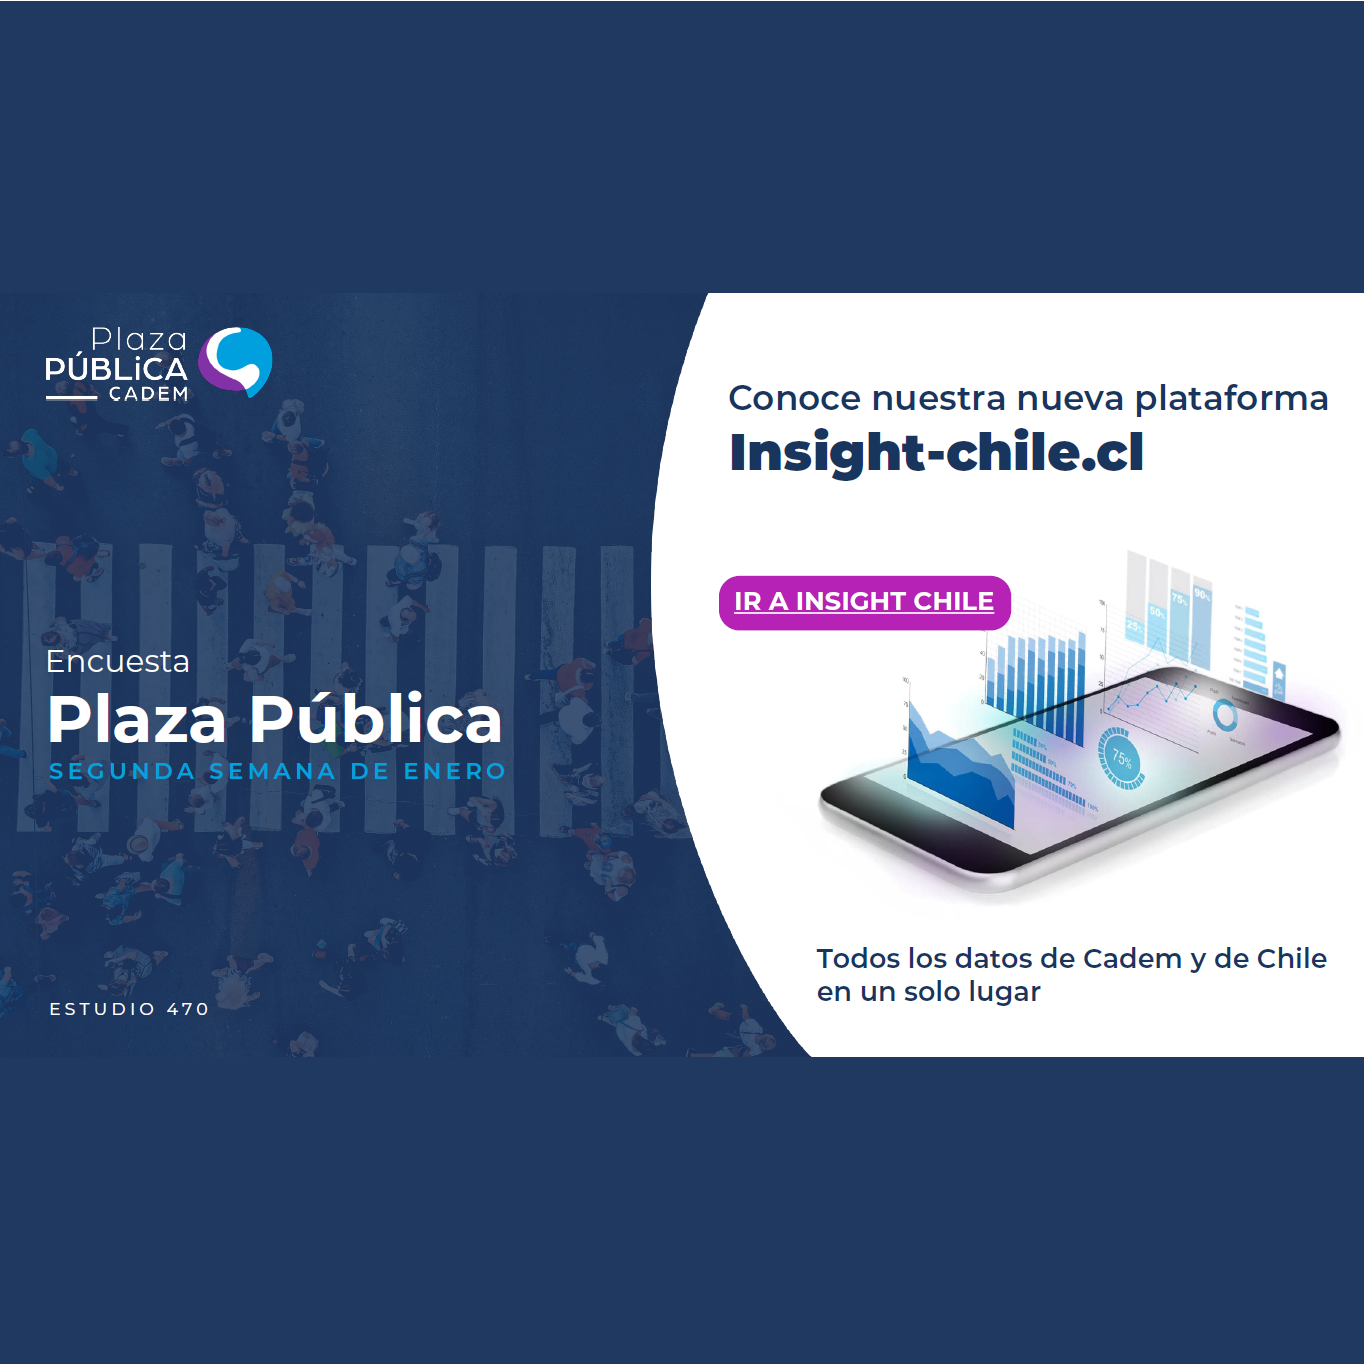 Encuesta Plaza Pública – Segunda semana de enero